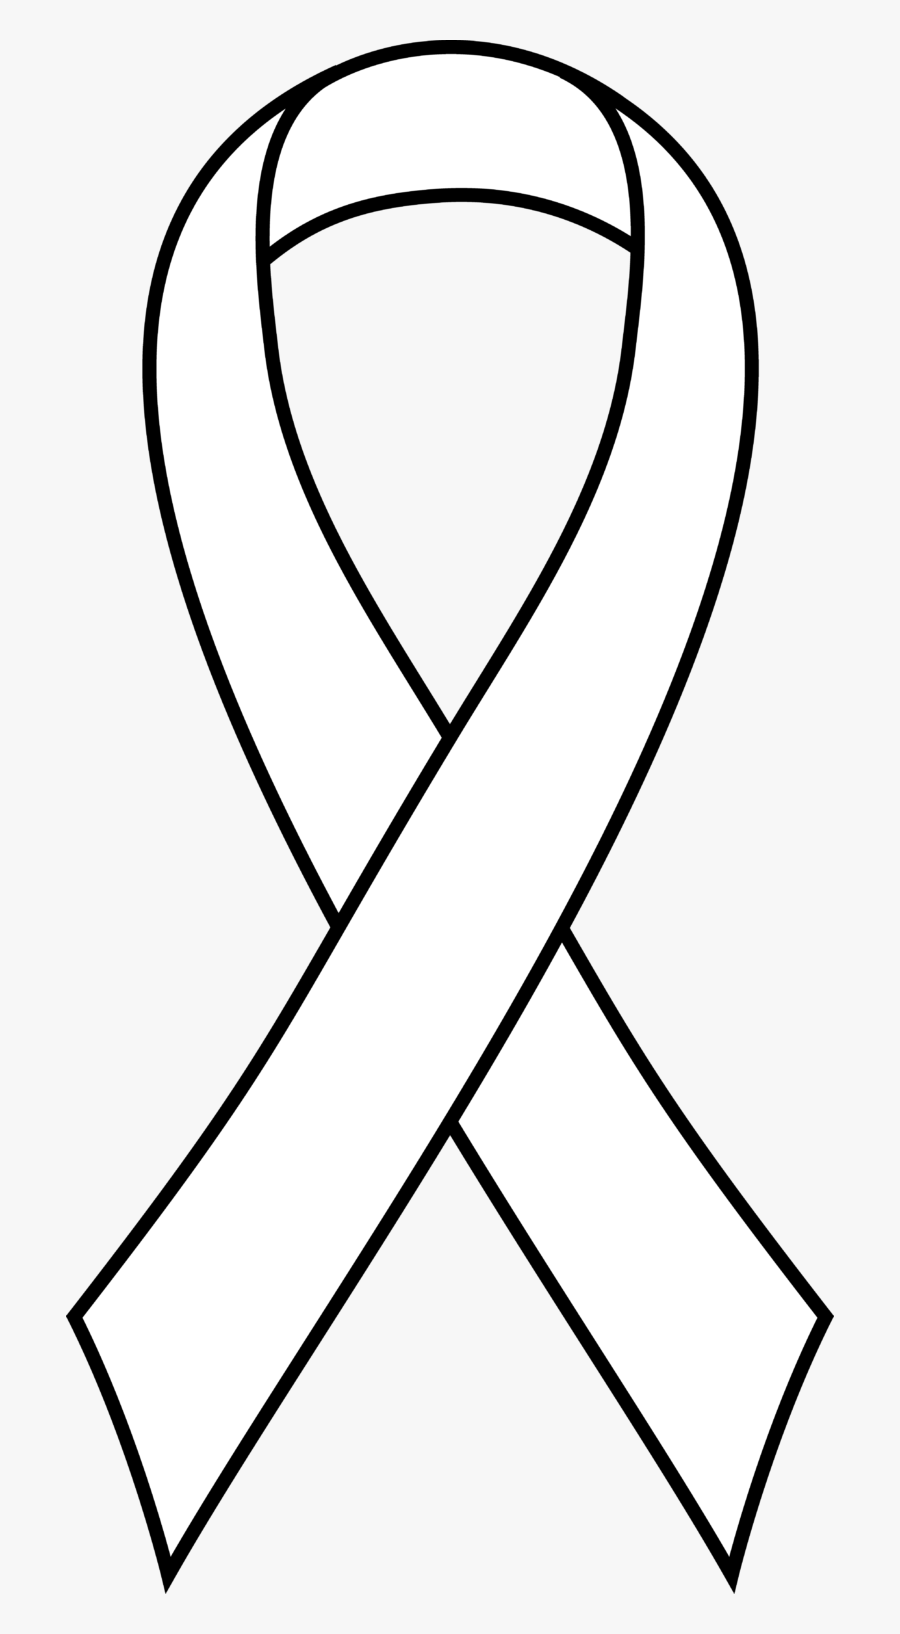 Cancer Ribbon Clipart - Awareness Ribbon Clip Art, Transparent Clipart